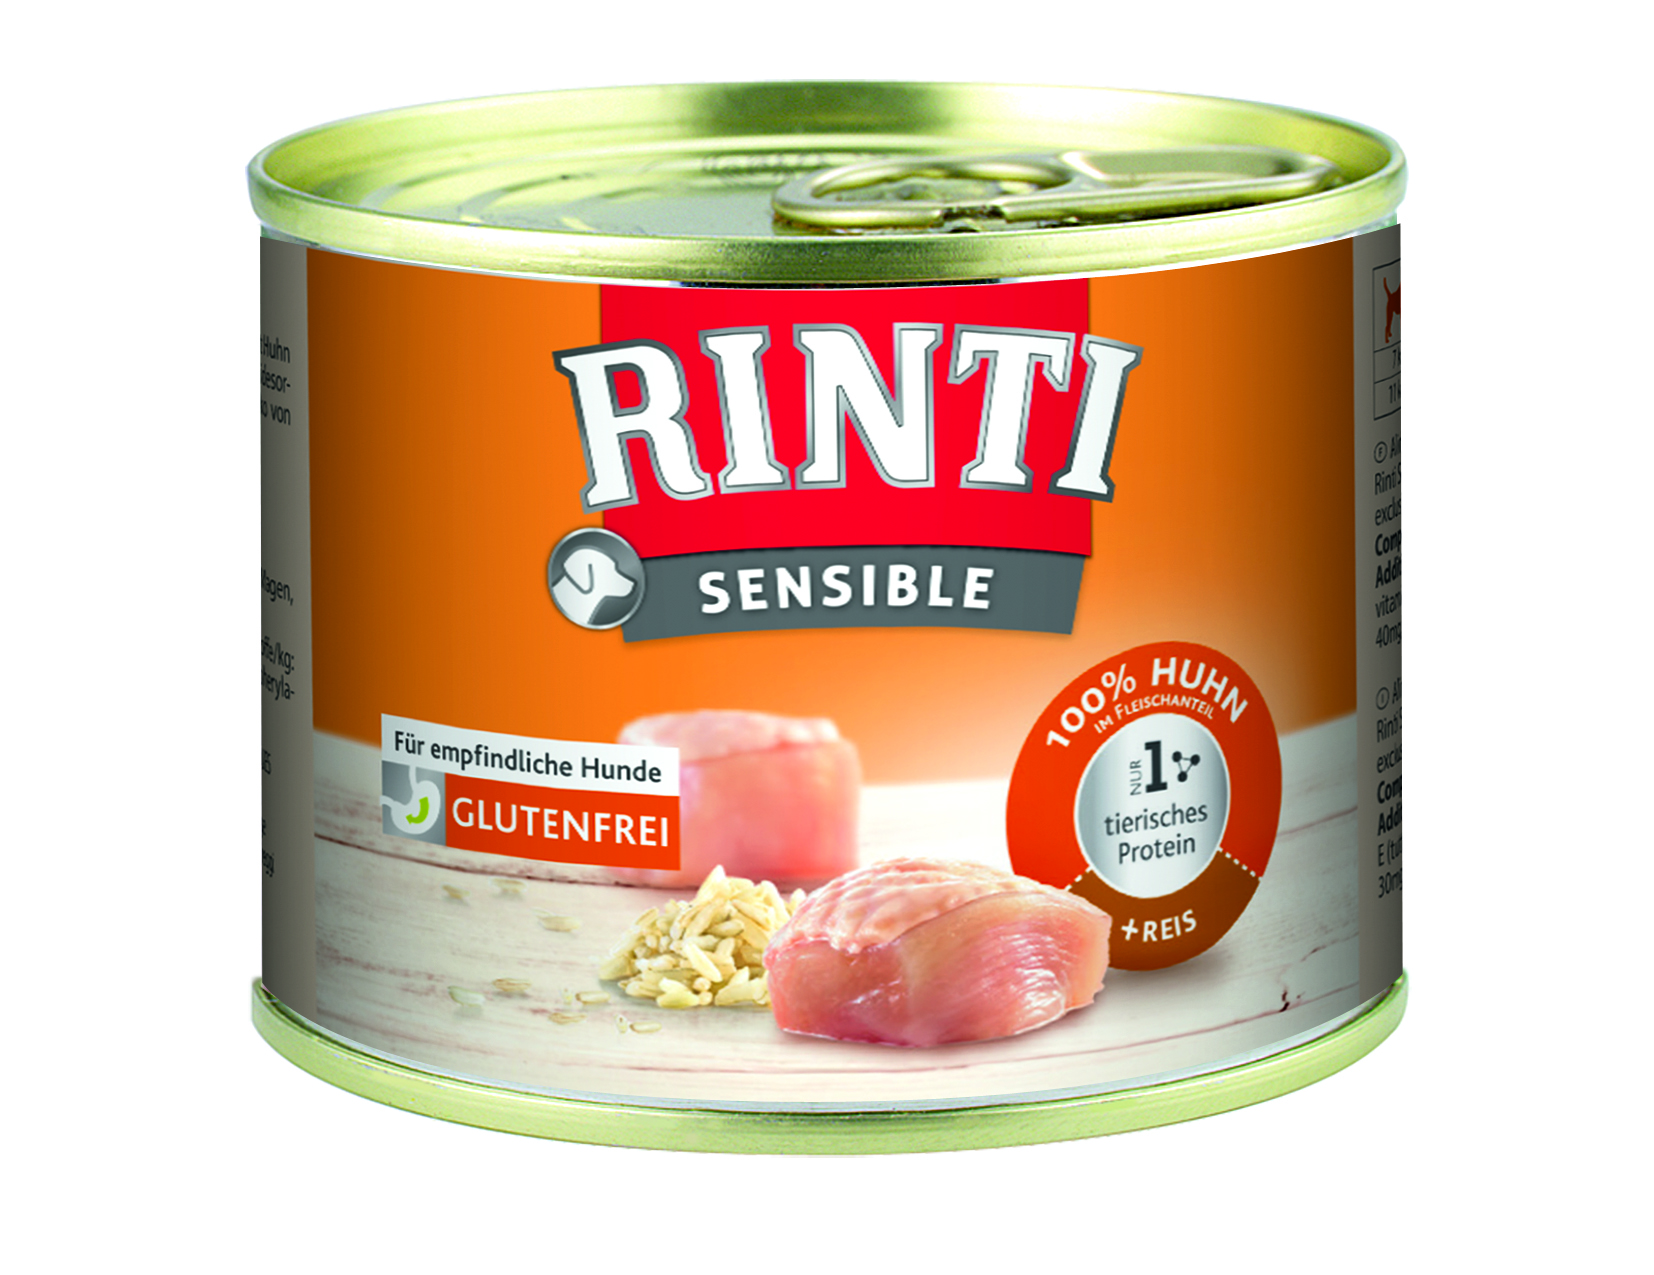 Rinti Sensible Huhn & Reis 185g